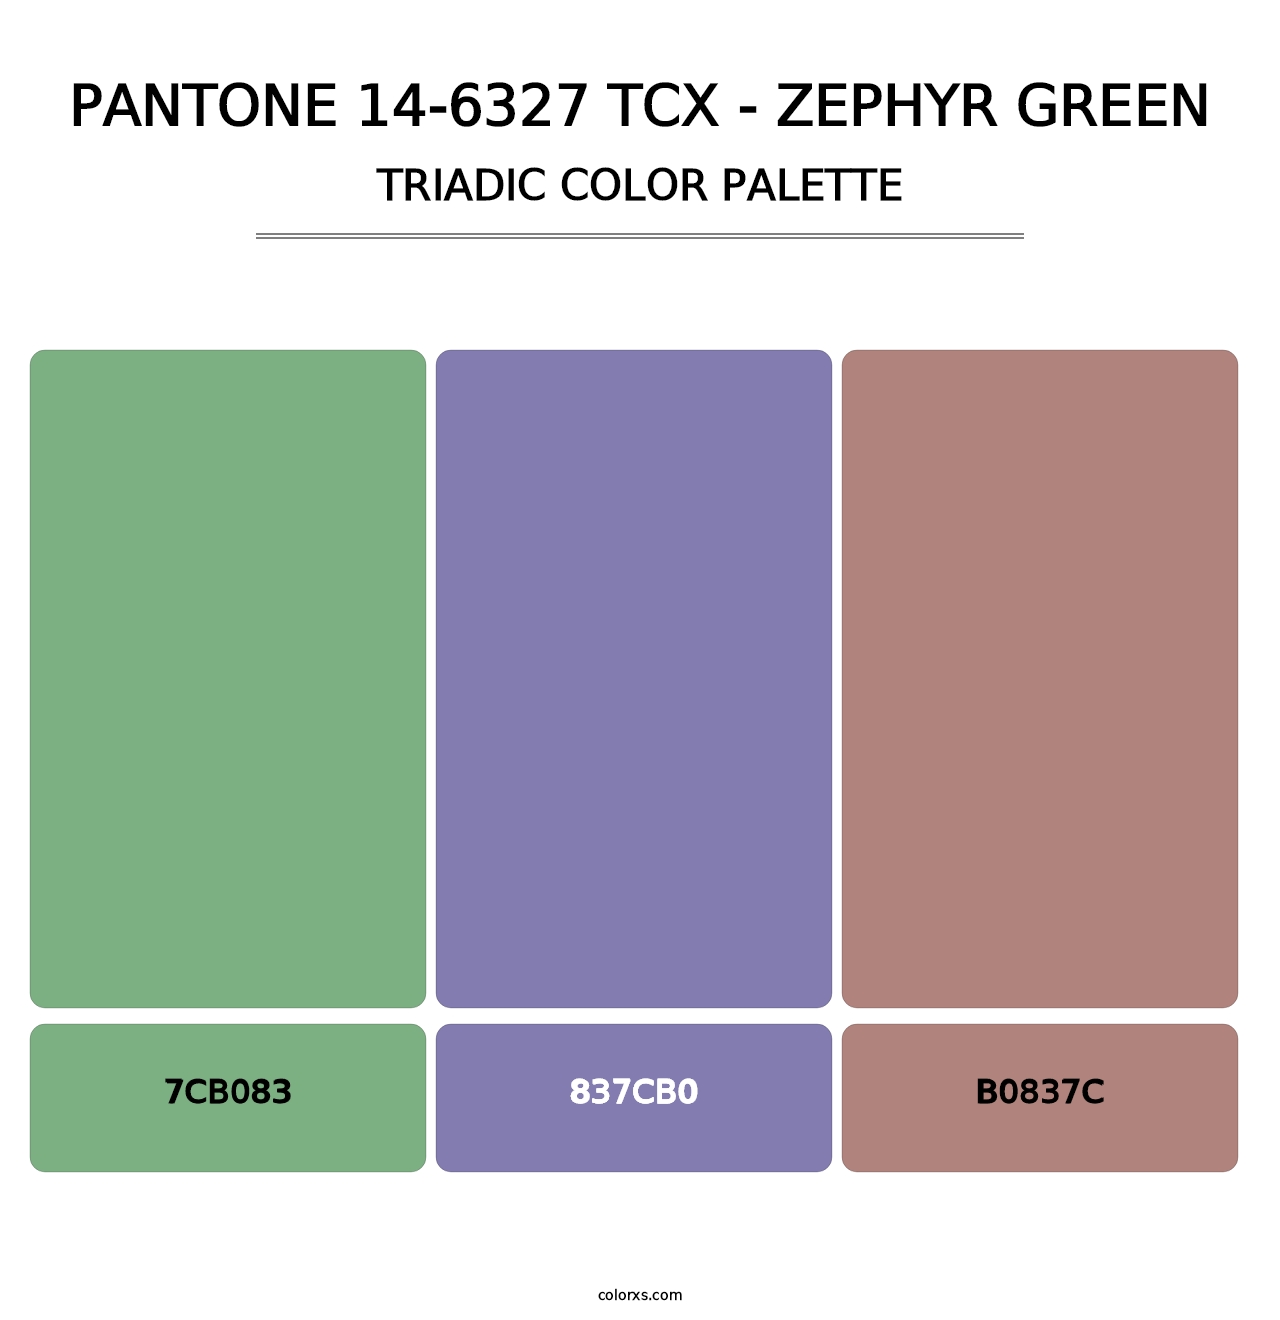 PANTONE 14-6327 TCX - Zephyr Green - Triadic Color Palette